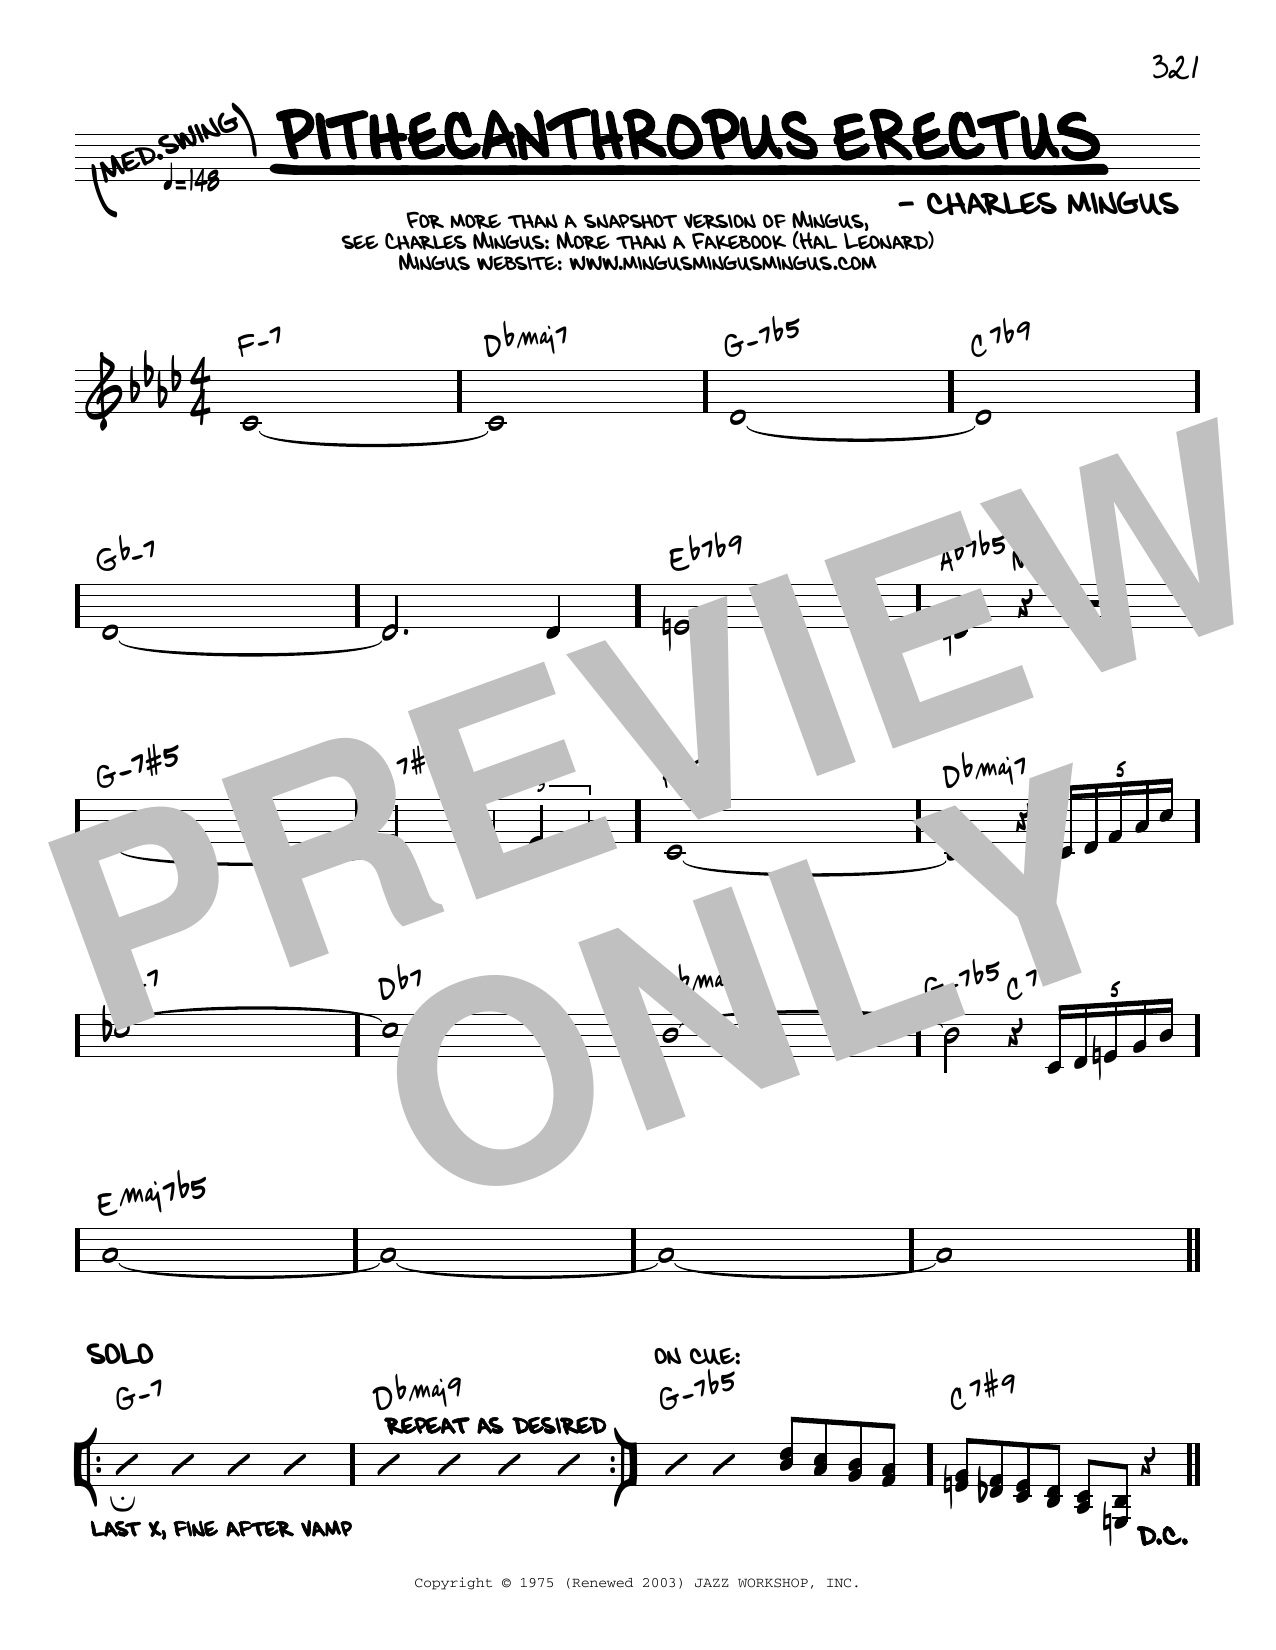 Download Charles Mingus Pithecanthropus Erectus [Reharmonized v Sheet Music